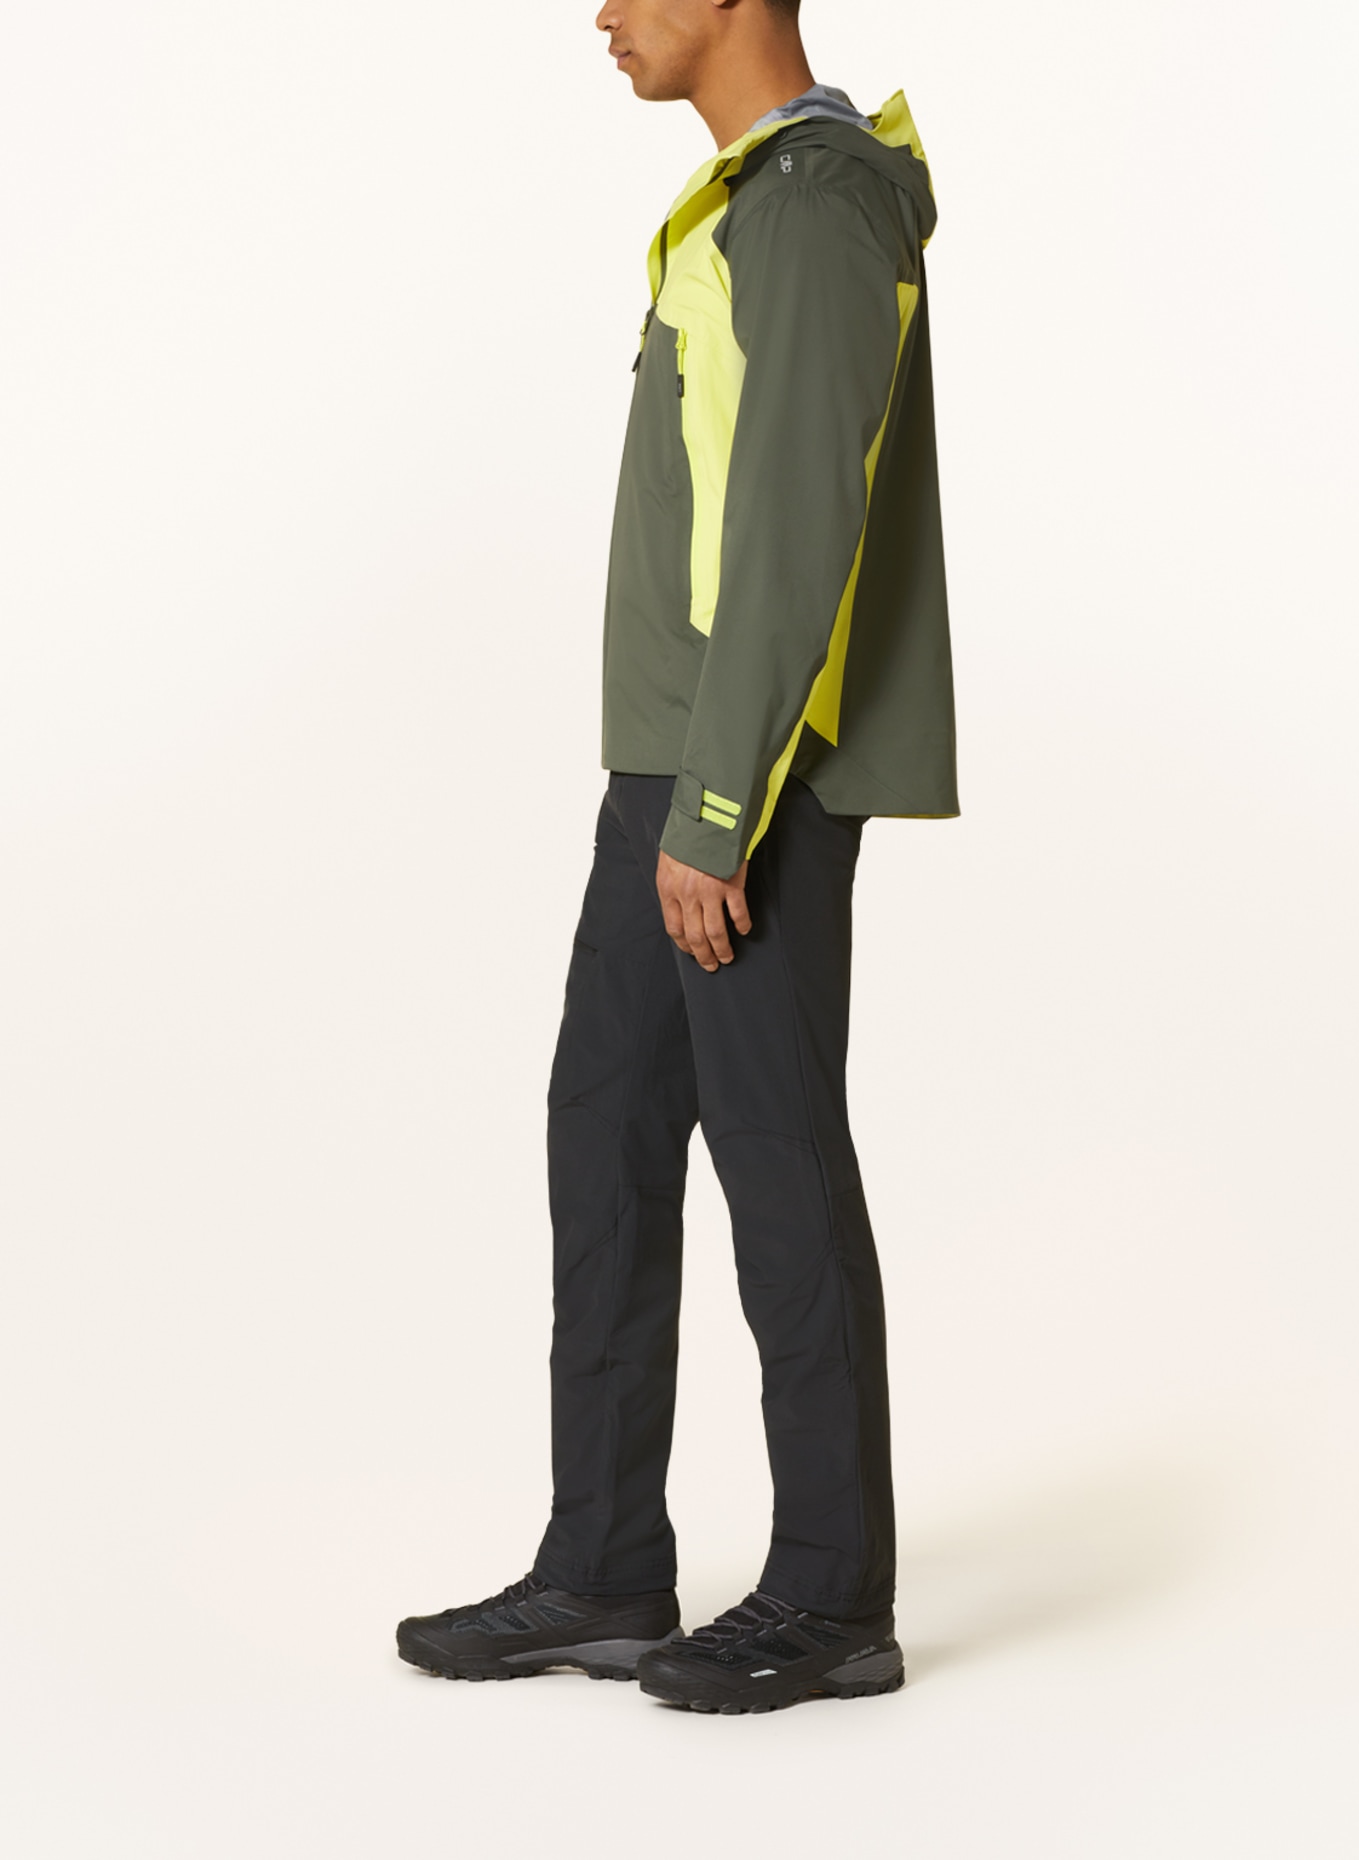 jacket Outdoor khaki/ yellow in CMP